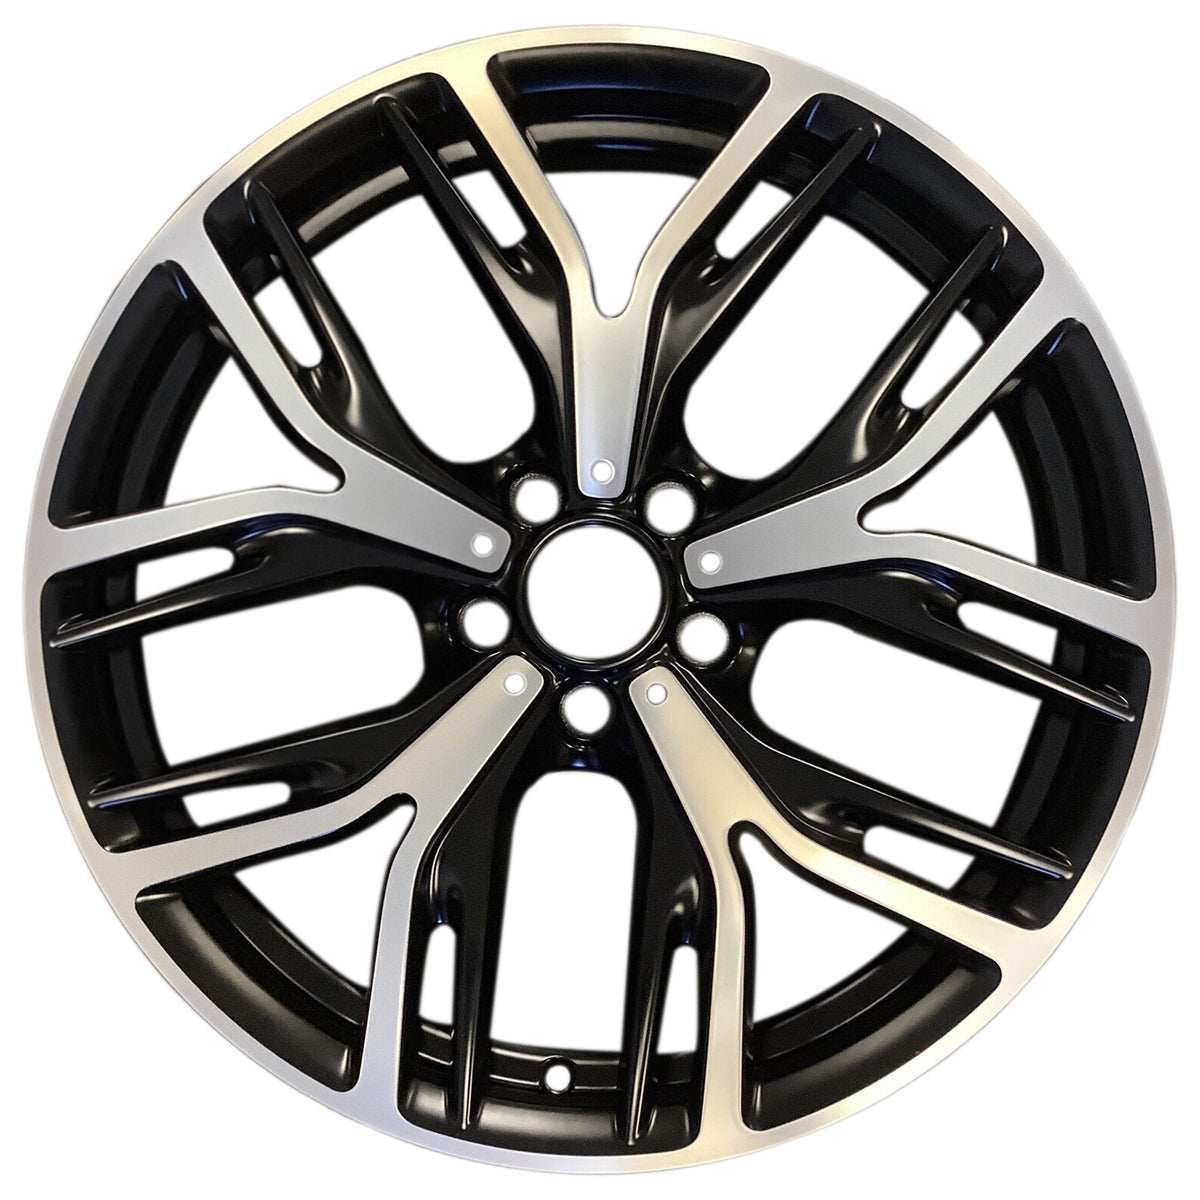 2016 BMW X3 20" Front OEM Wheel Rim Style 542 W86107MB